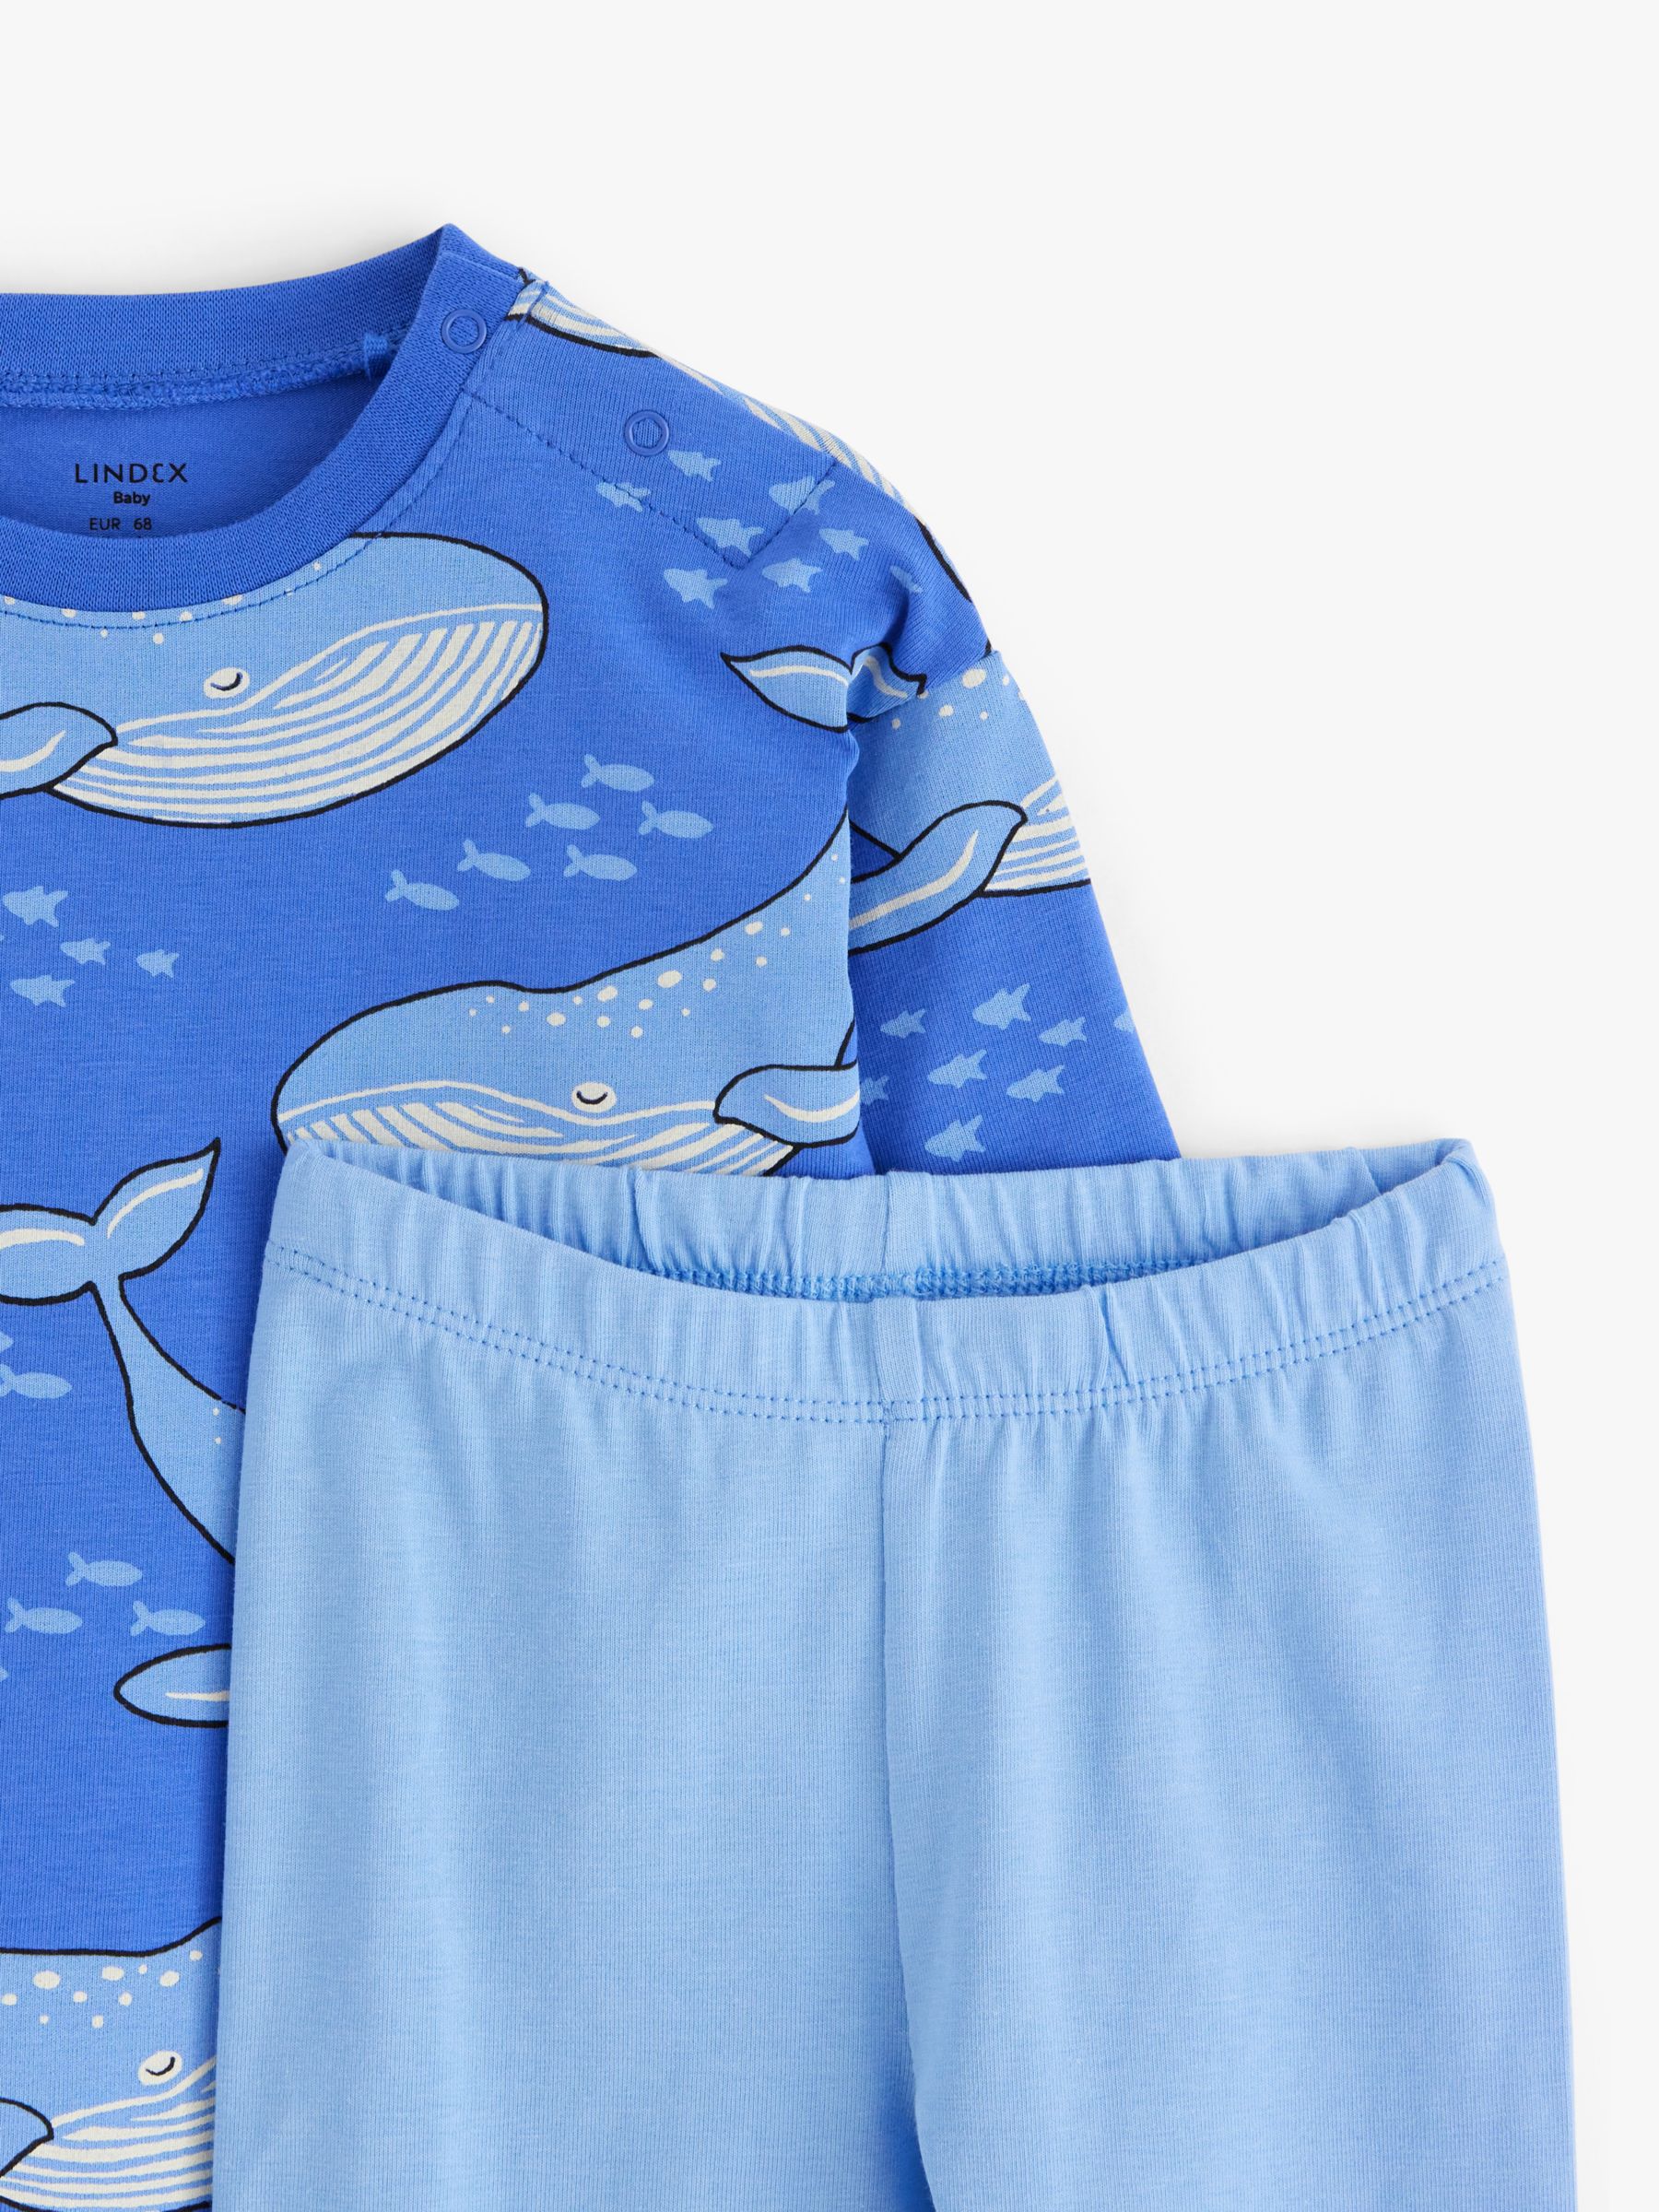 Lindex Baby Whale Top & Leggings Set, Blue, 4-6 months